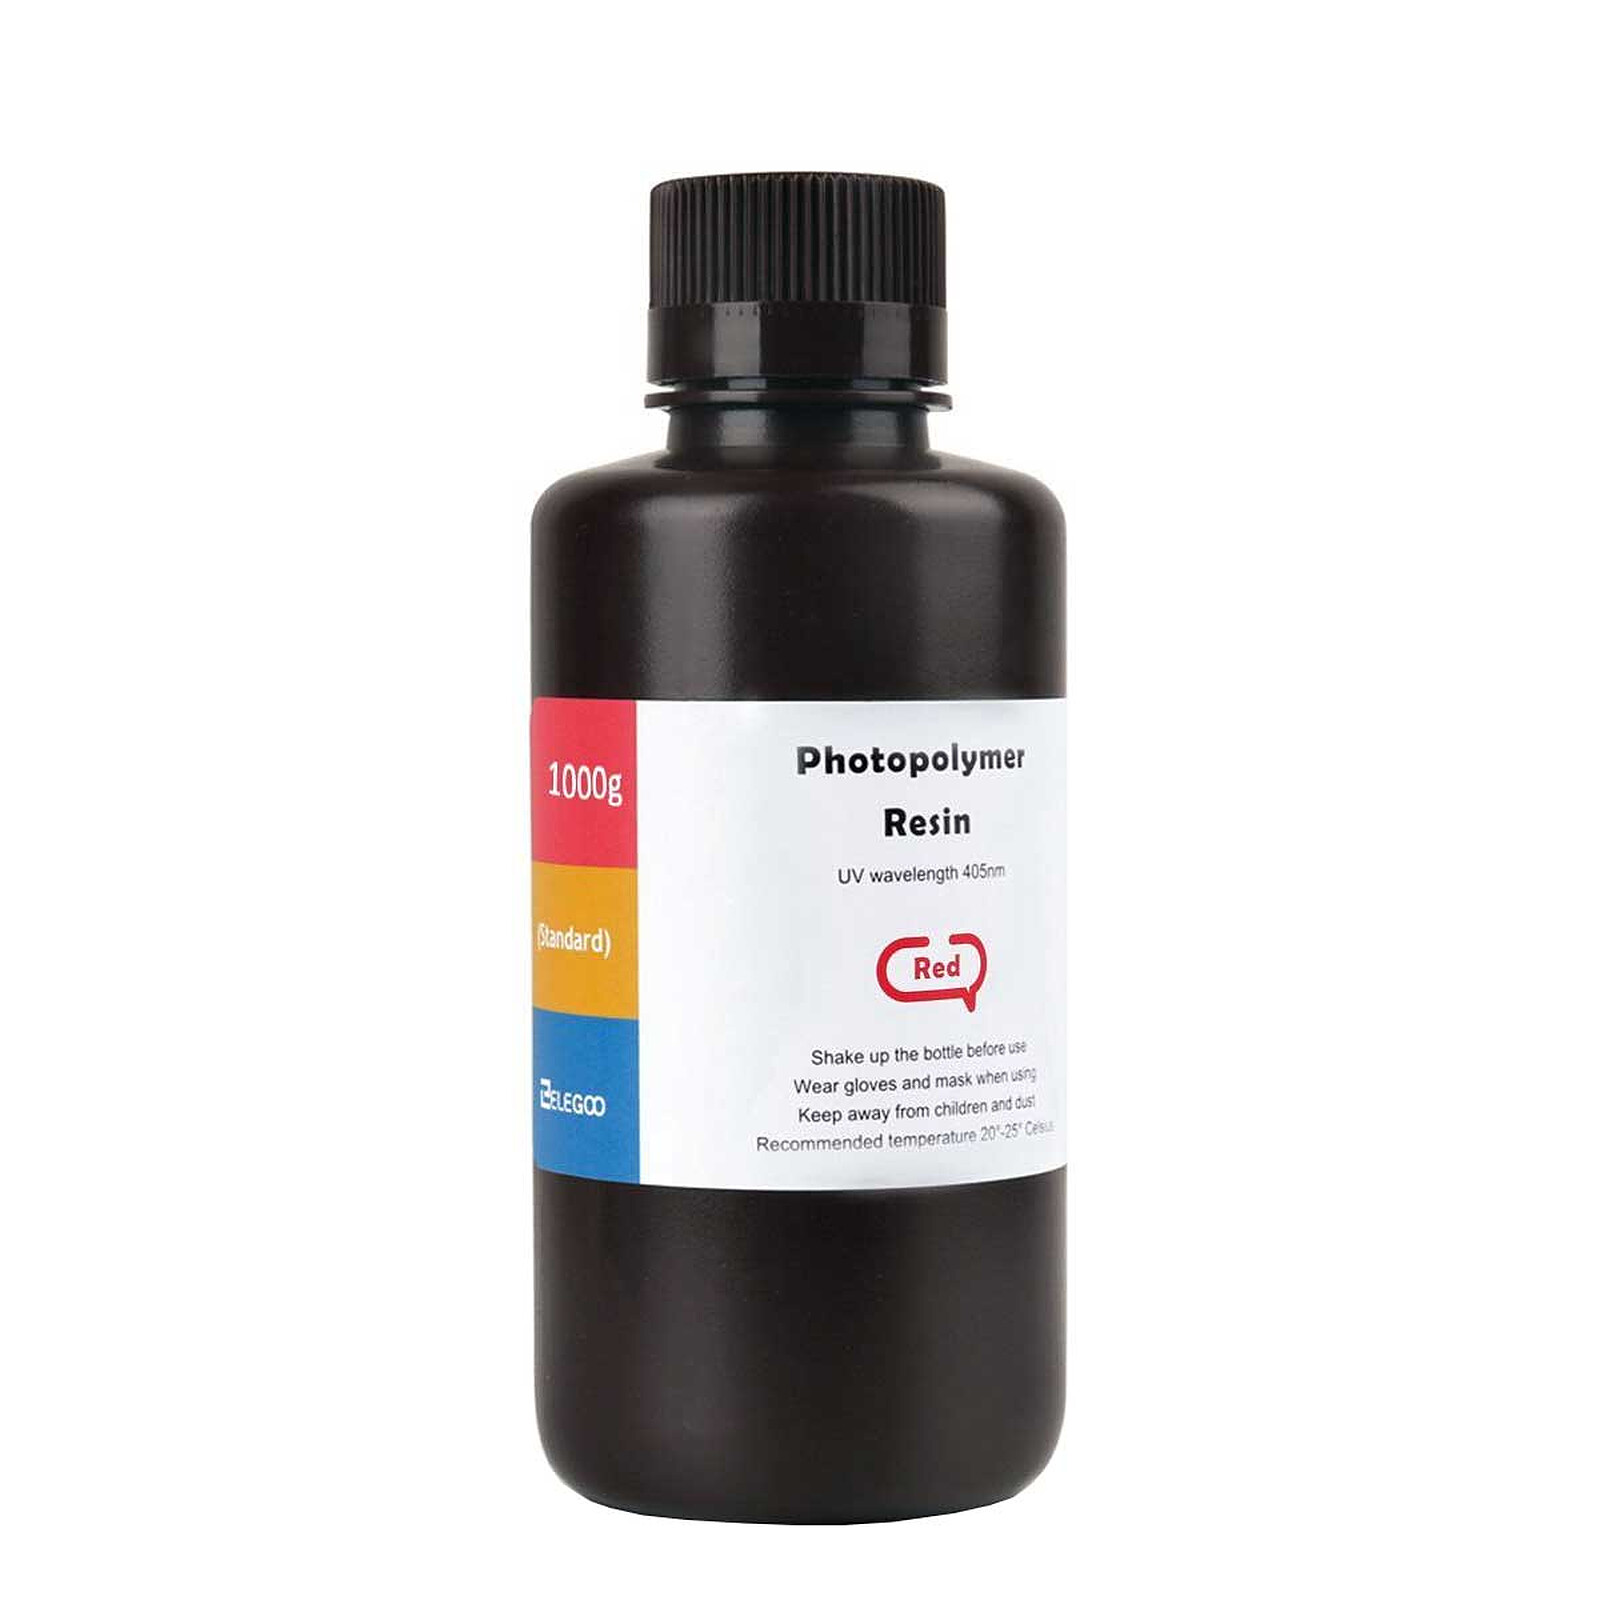 ELEGOO ABS-Like Resin UV-Curing Resin Standard Photopolymer